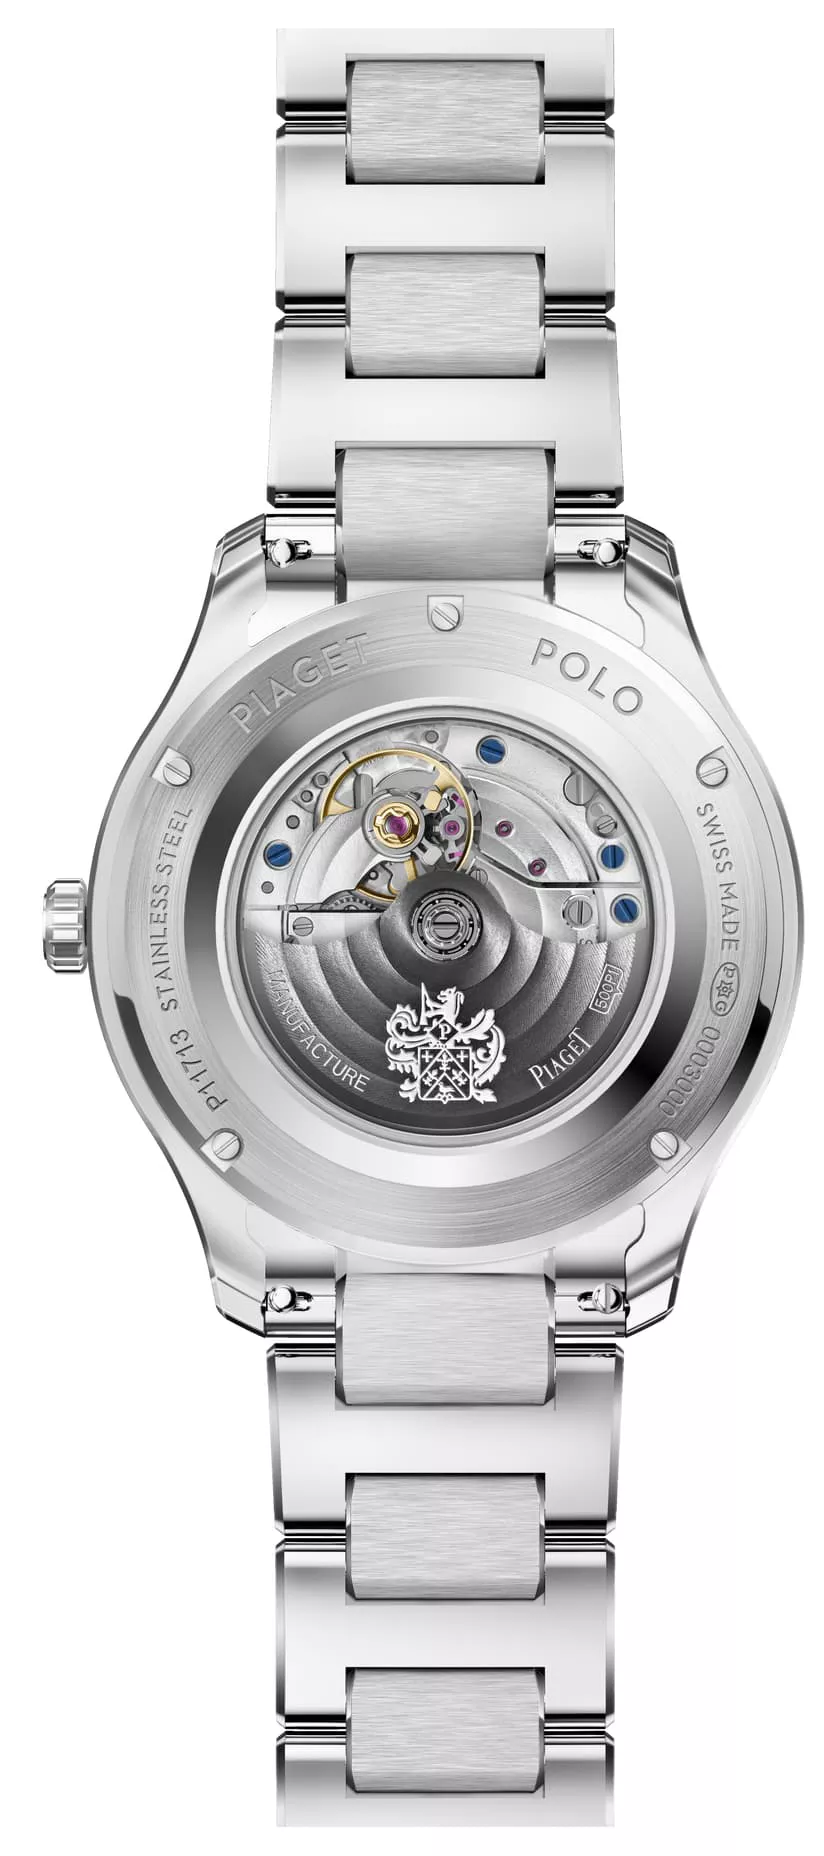 Piaget Polo G0A47027 Date Diamond Watch 36mm